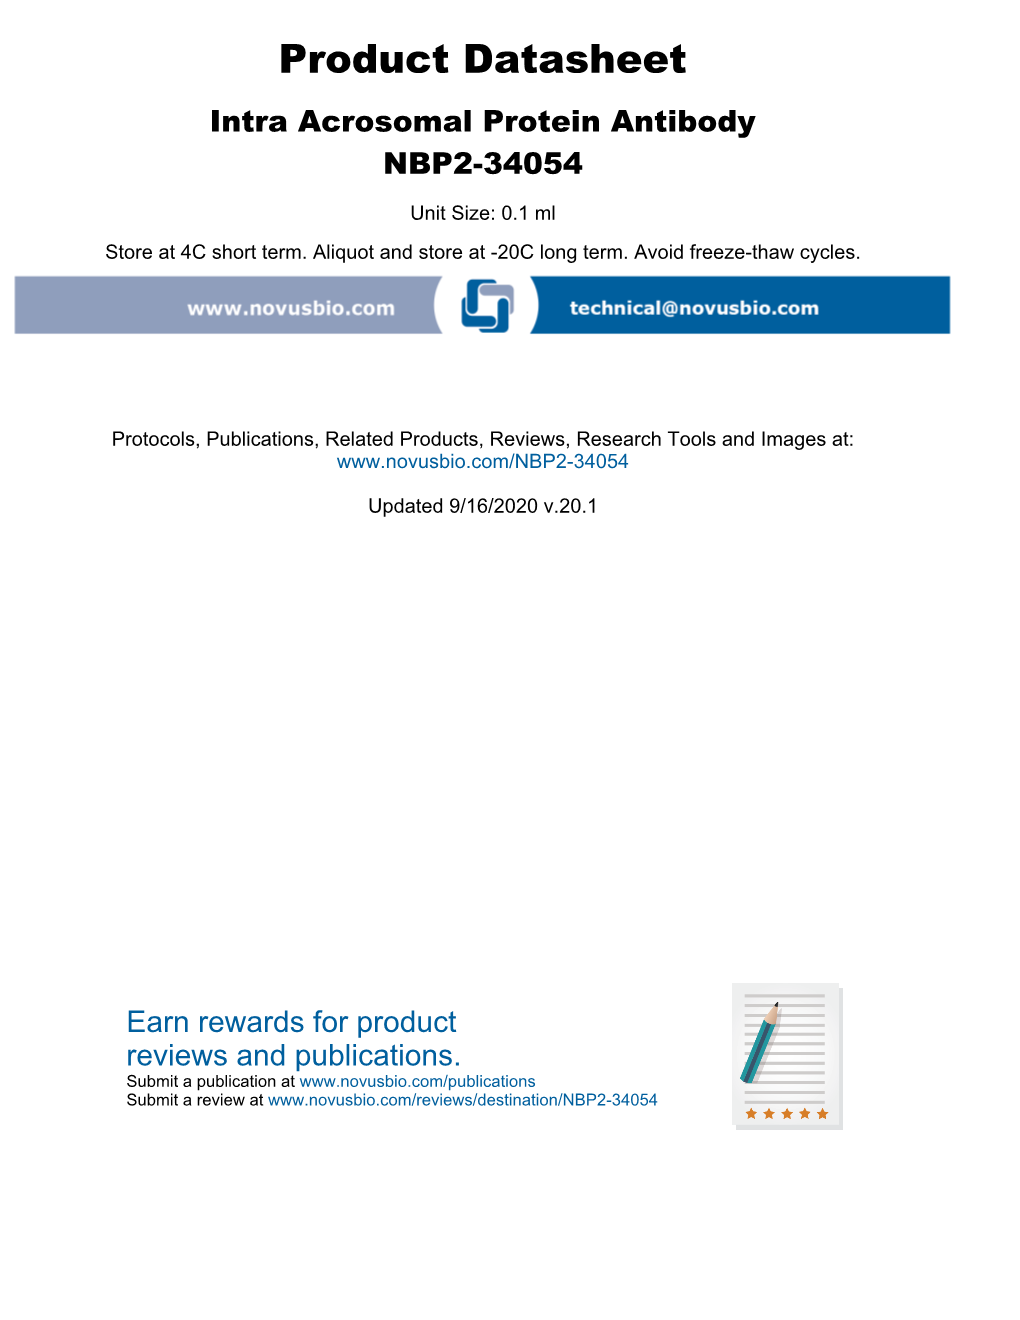 Product Datasheet Intra Acrosomal Protein Antibody NBP2-34054